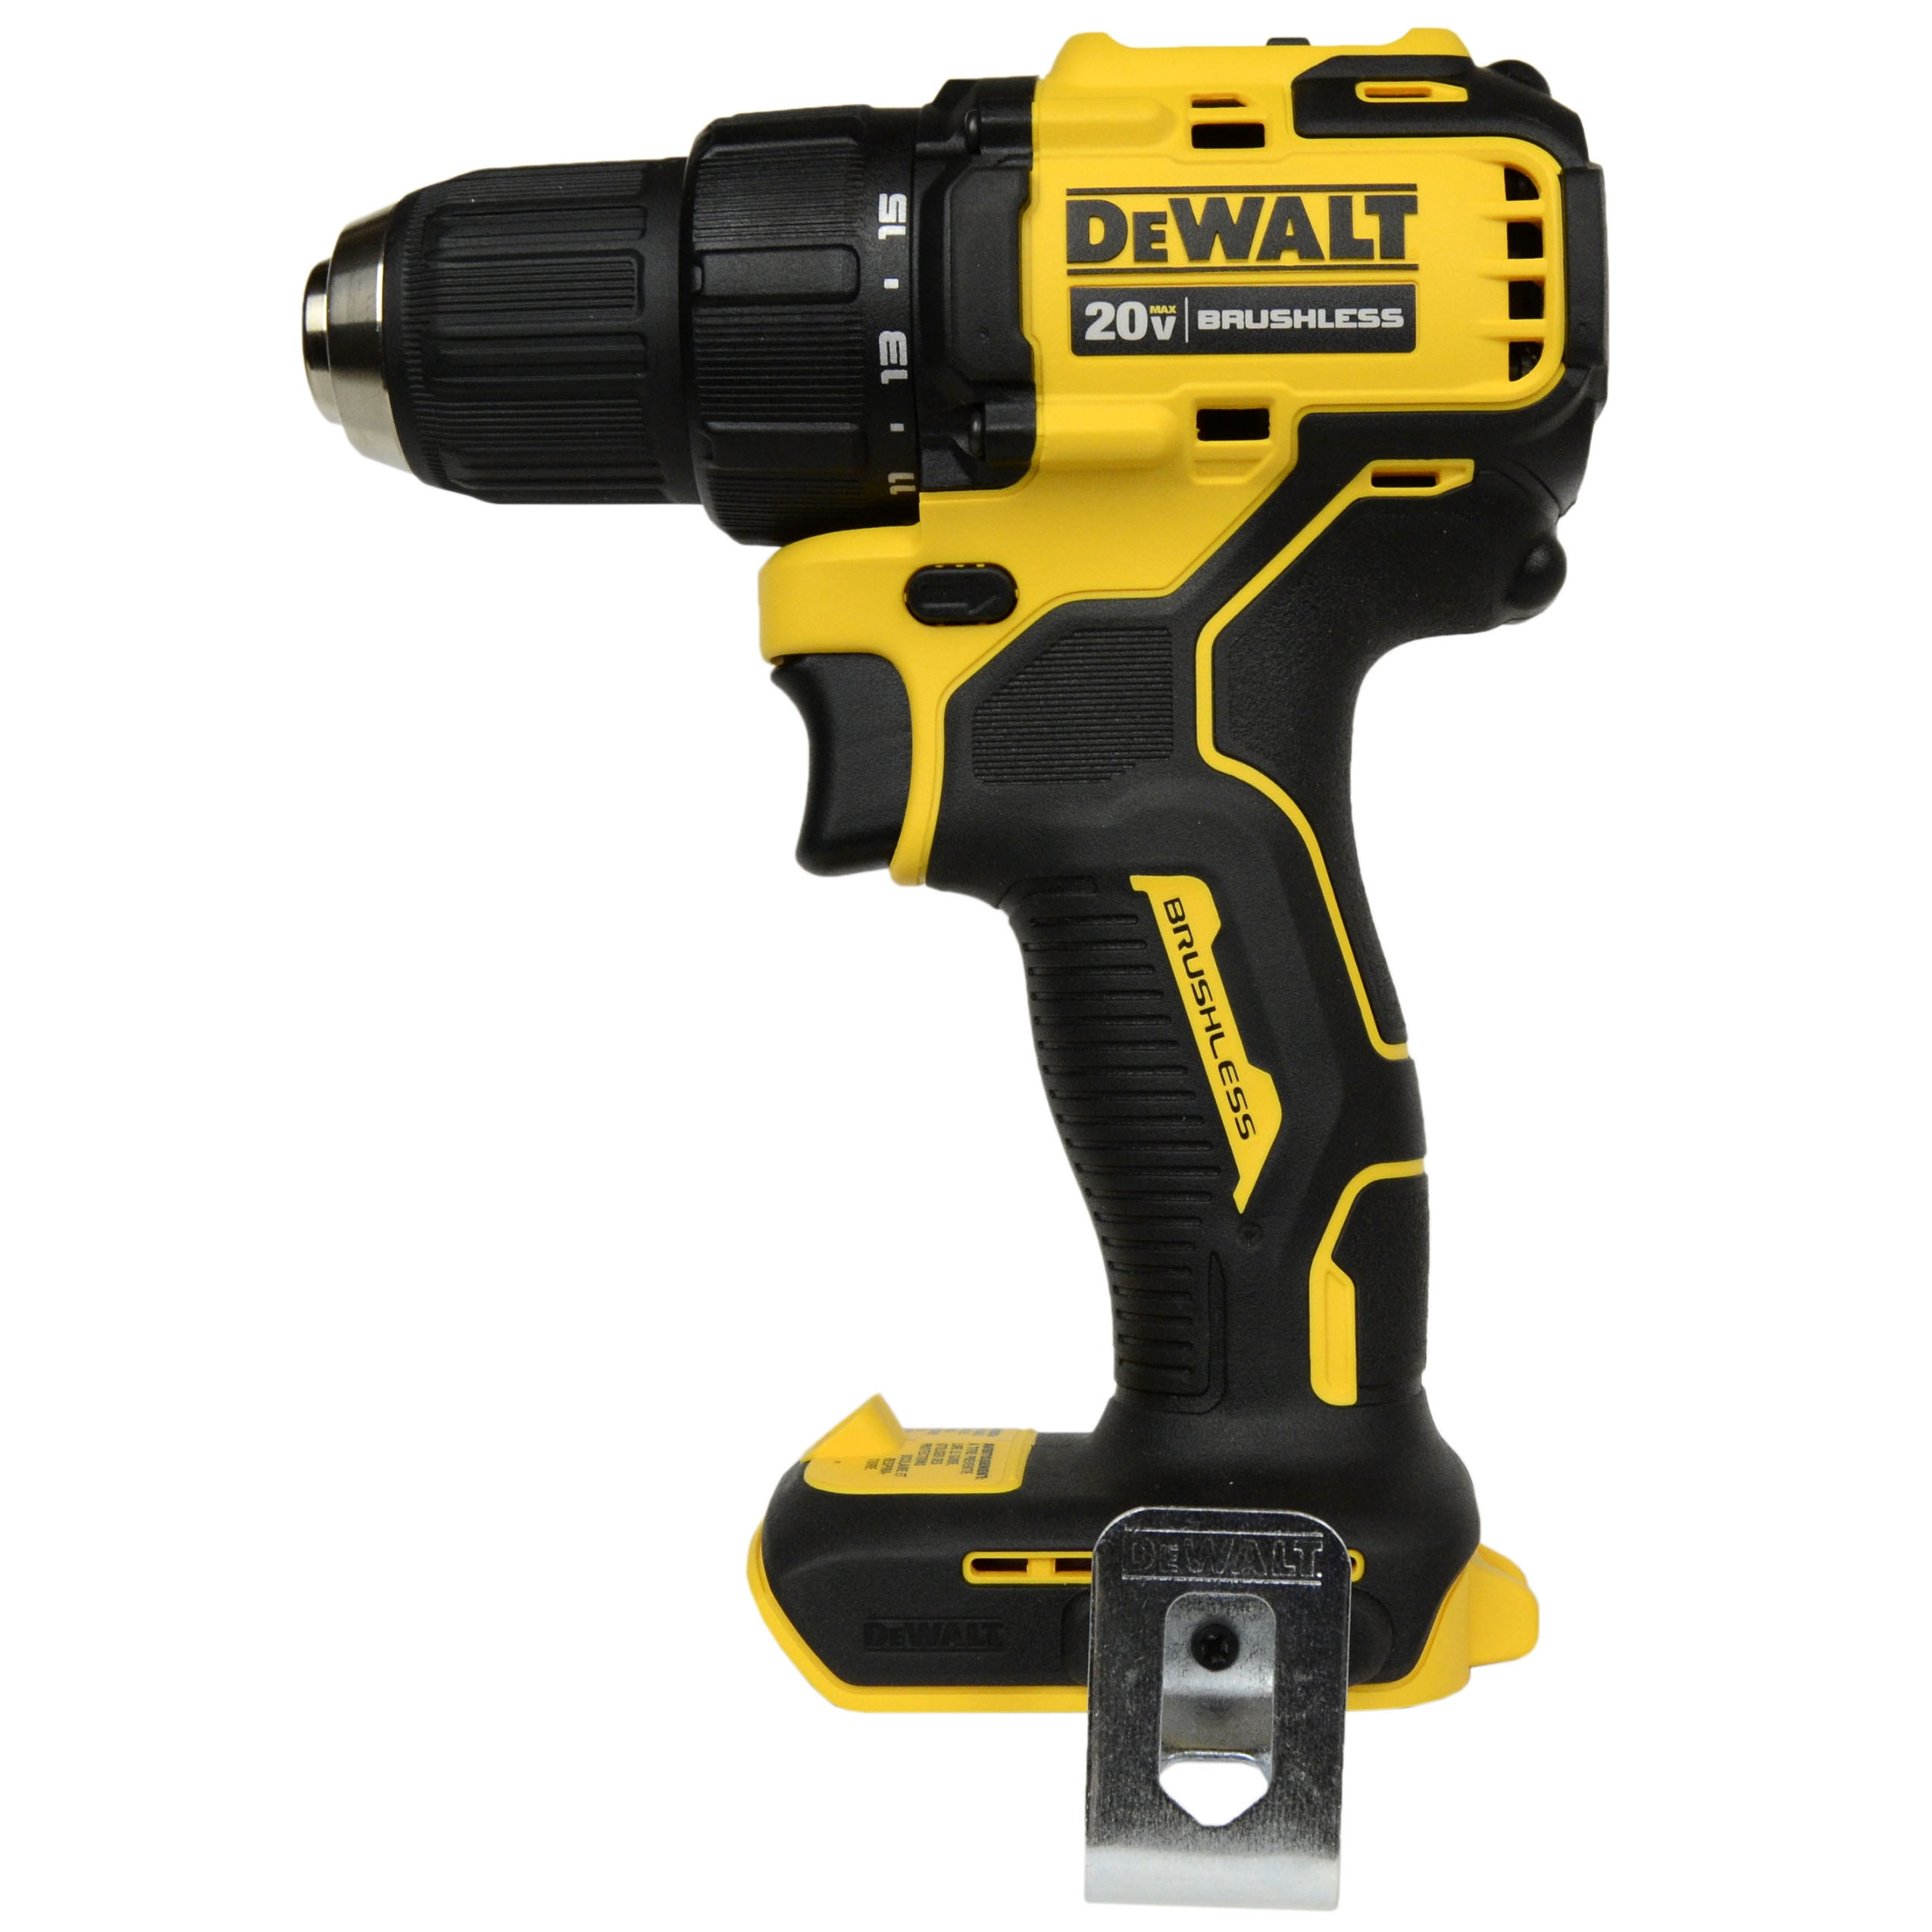 Dewalt DCD708 Max Brushless Cordless Drill Driver – Tool Only - Walmart.com